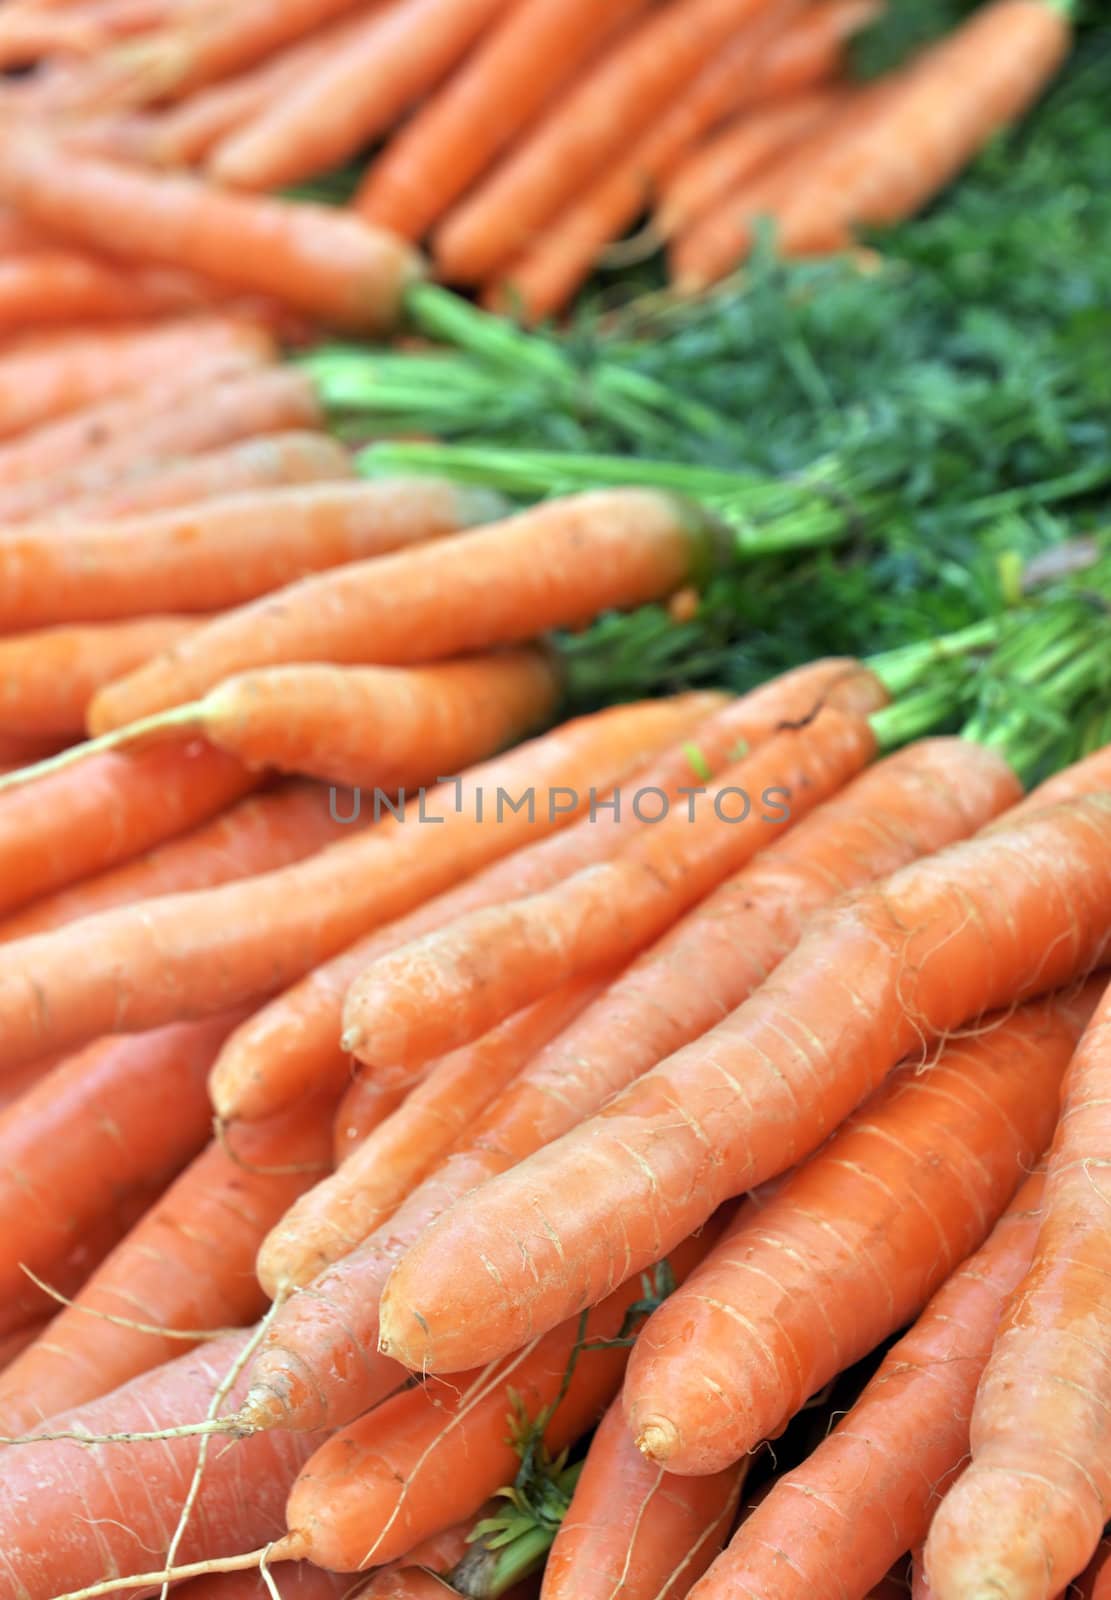 Frash Carrots by Rainman